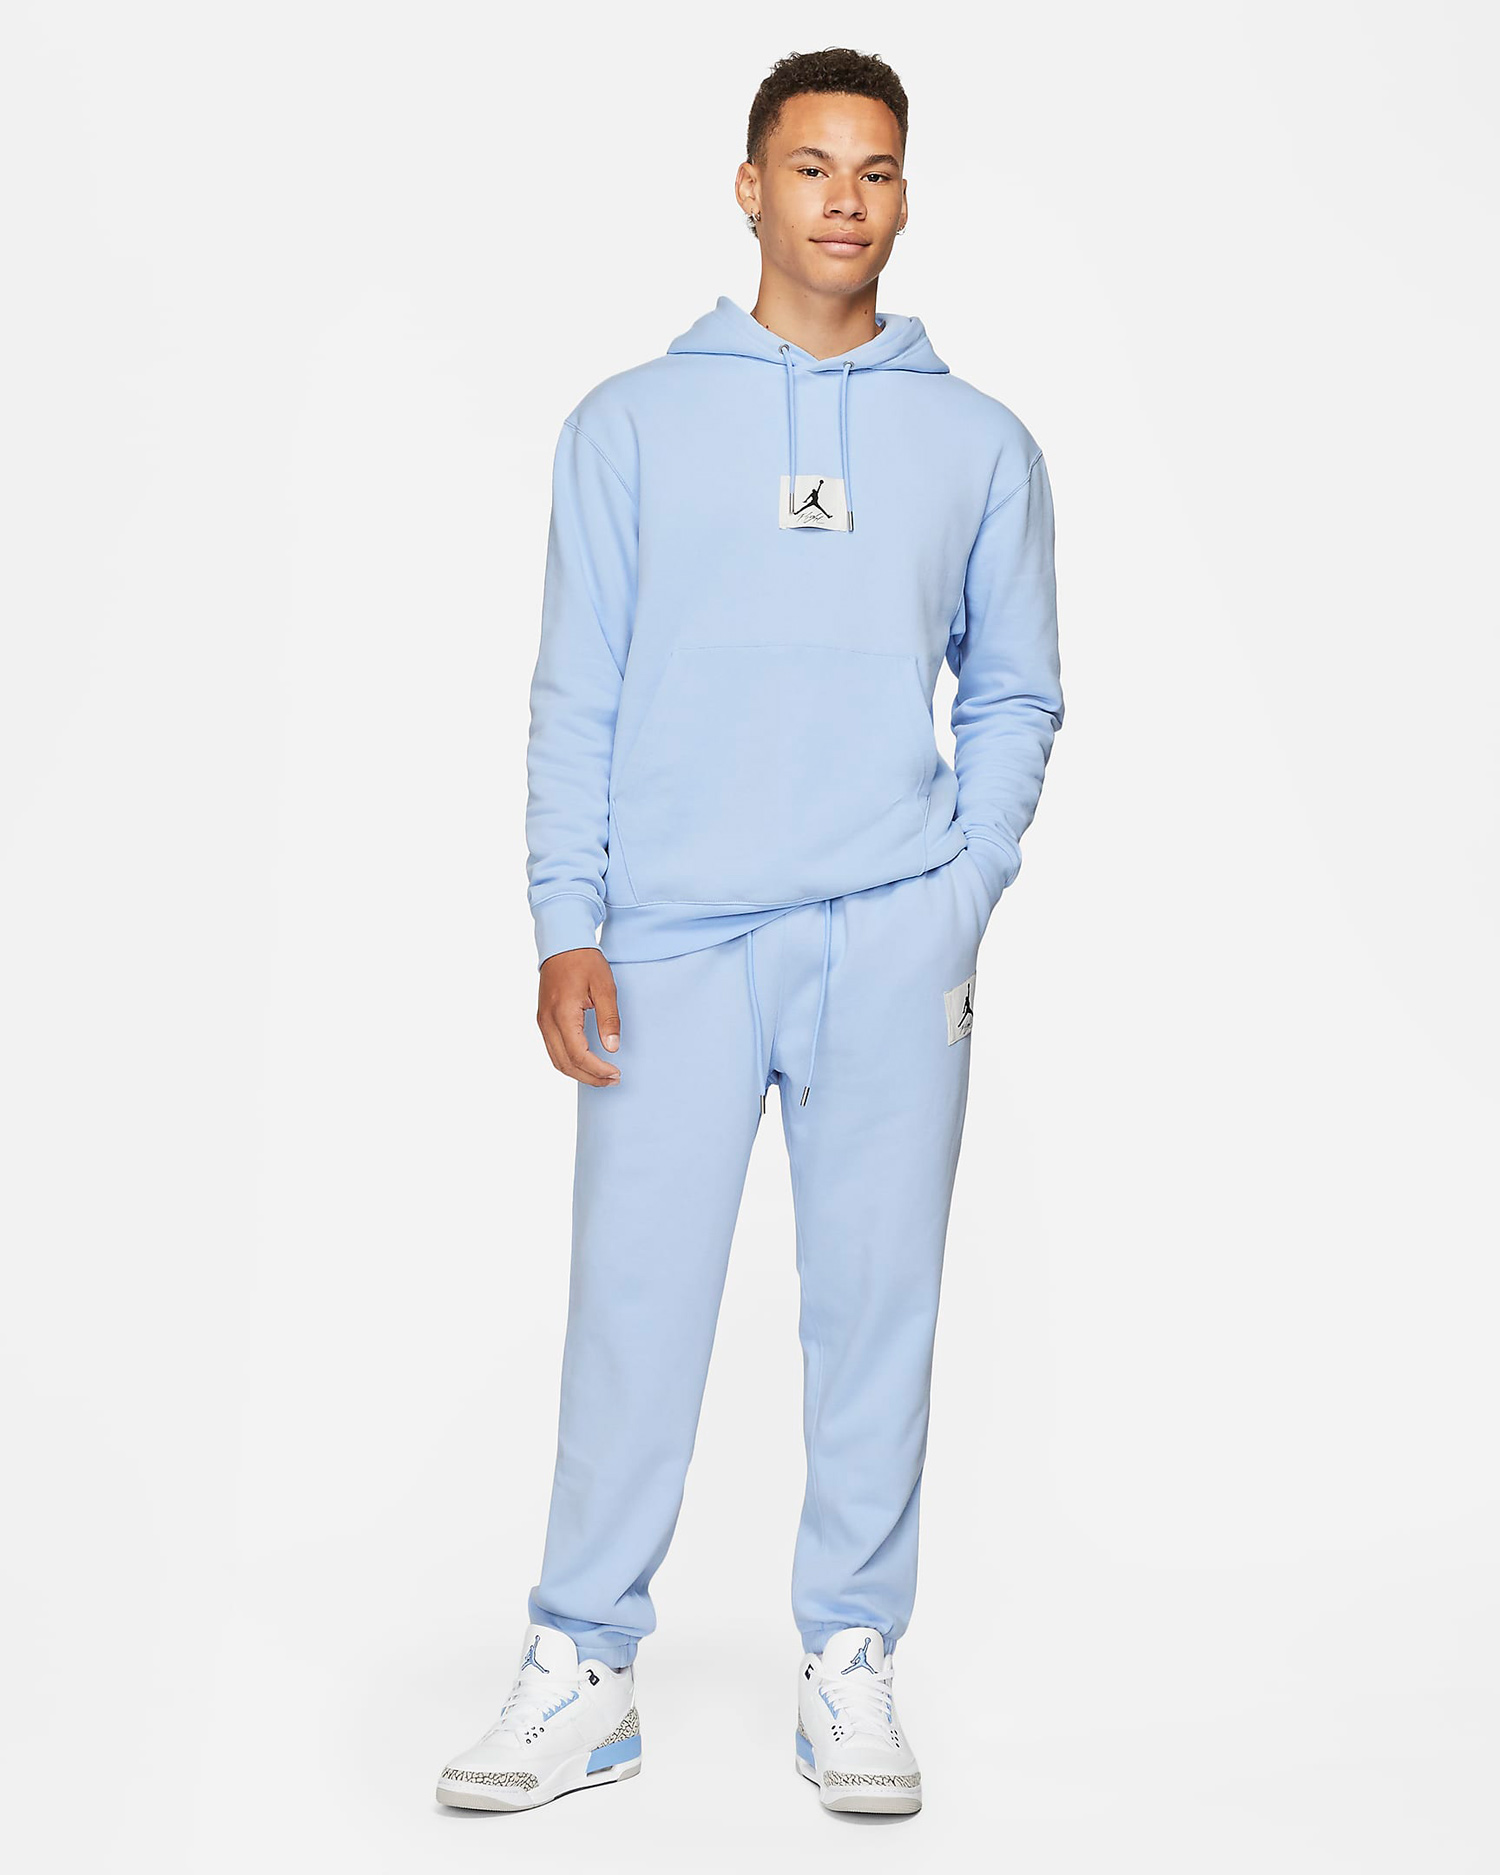 jordan-aluminum-blue-hoodie-and-pants-outfit